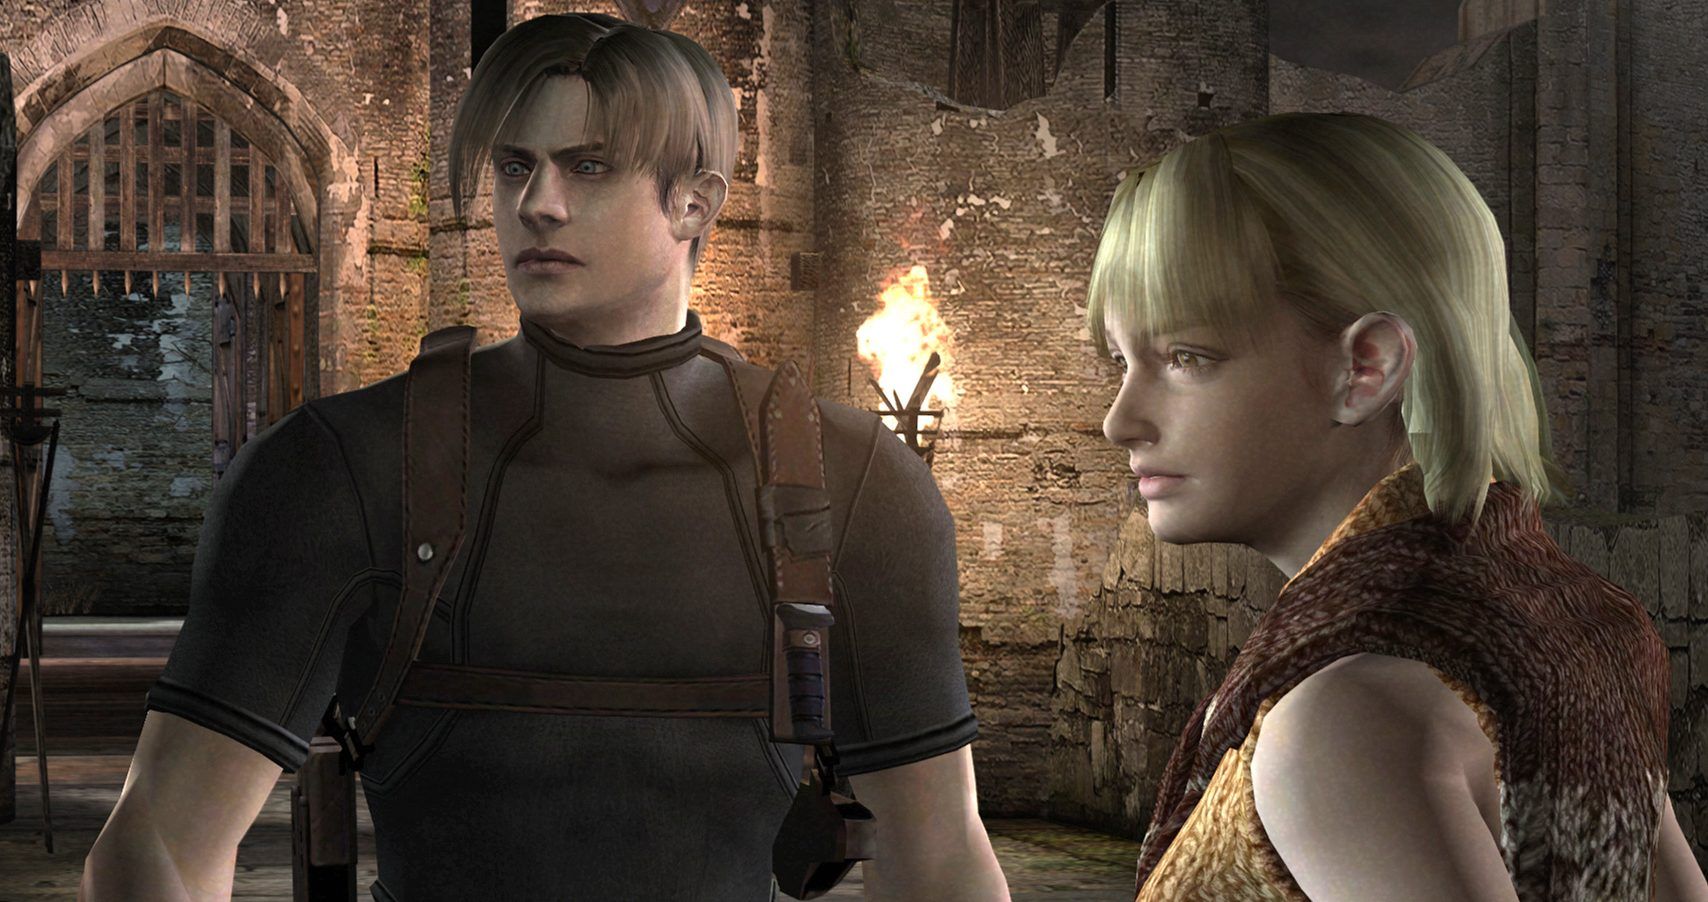 Resident Evil 4 - Gamecube by Capcom